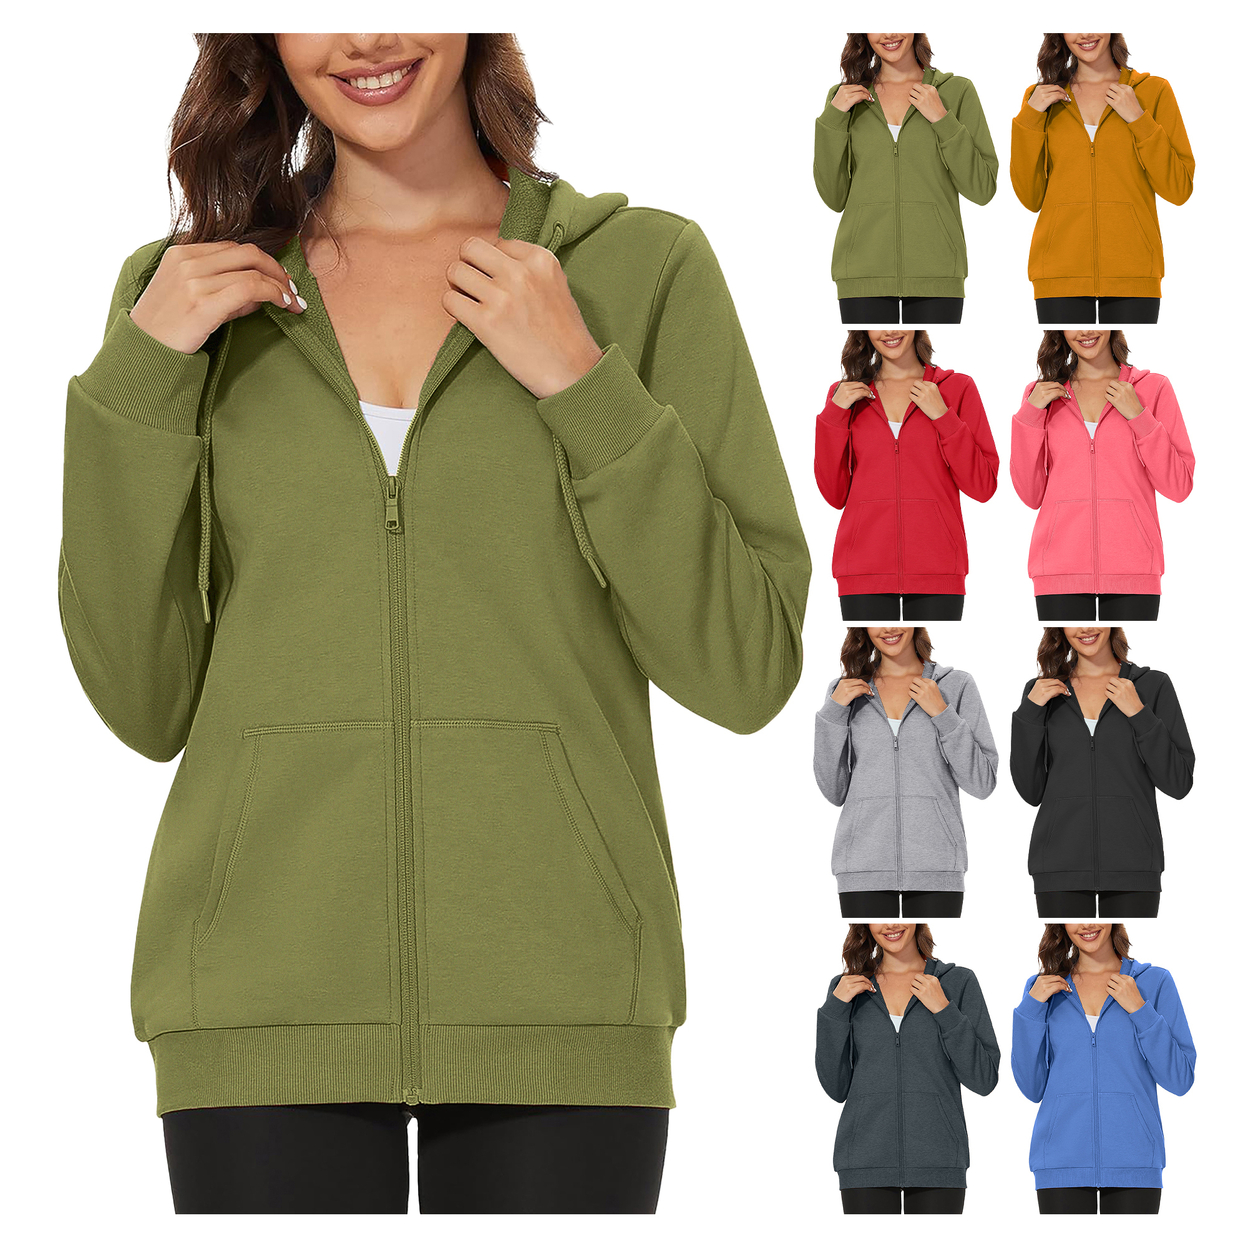 2-Pack: Women's Winter Warm Soft Blend Fleece Lined Full Zip Up Hoodie - Black & Charcoal, X-large